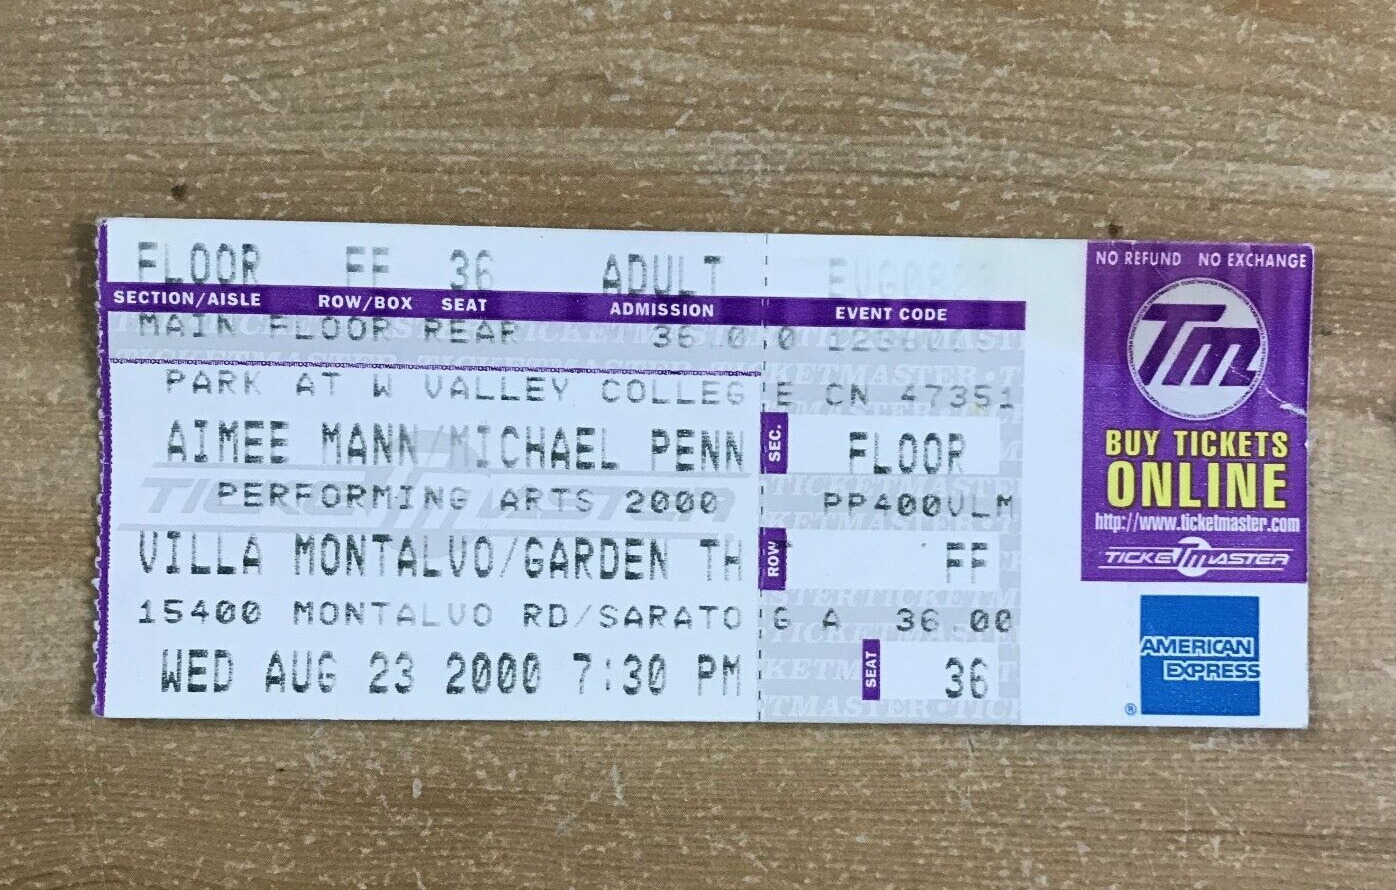 Amiee Mann - Michael Penn Concert Ticket August 23 2000 Villa Montalvo CA Rare